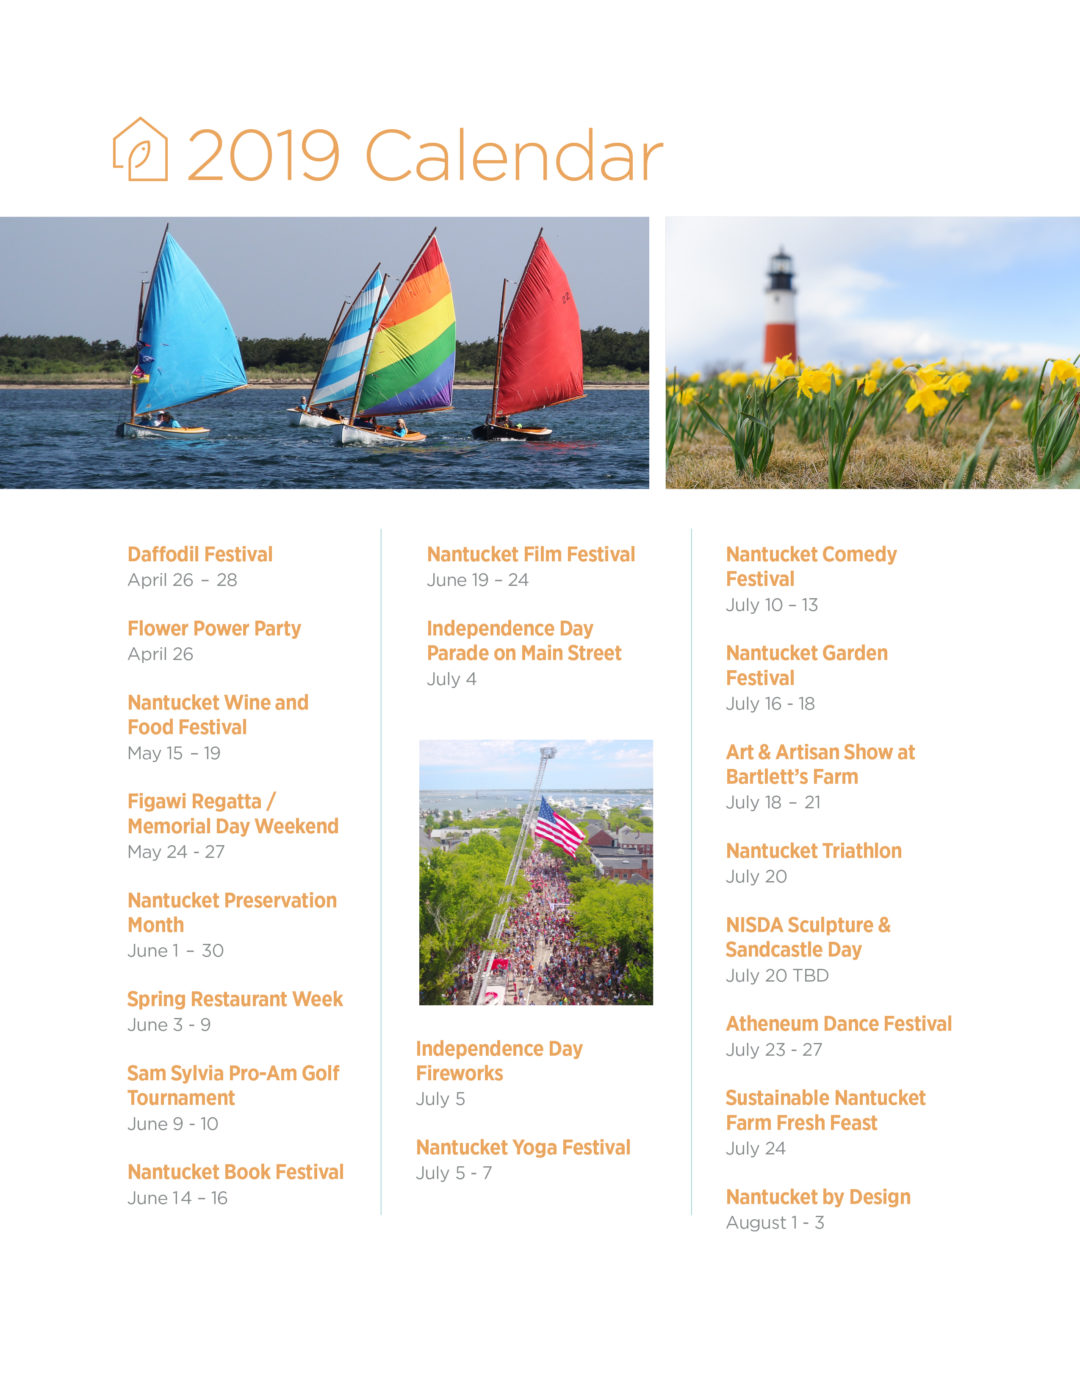 2019 Nantucket Calendar of Events - Fisher Real Estate Nantucket